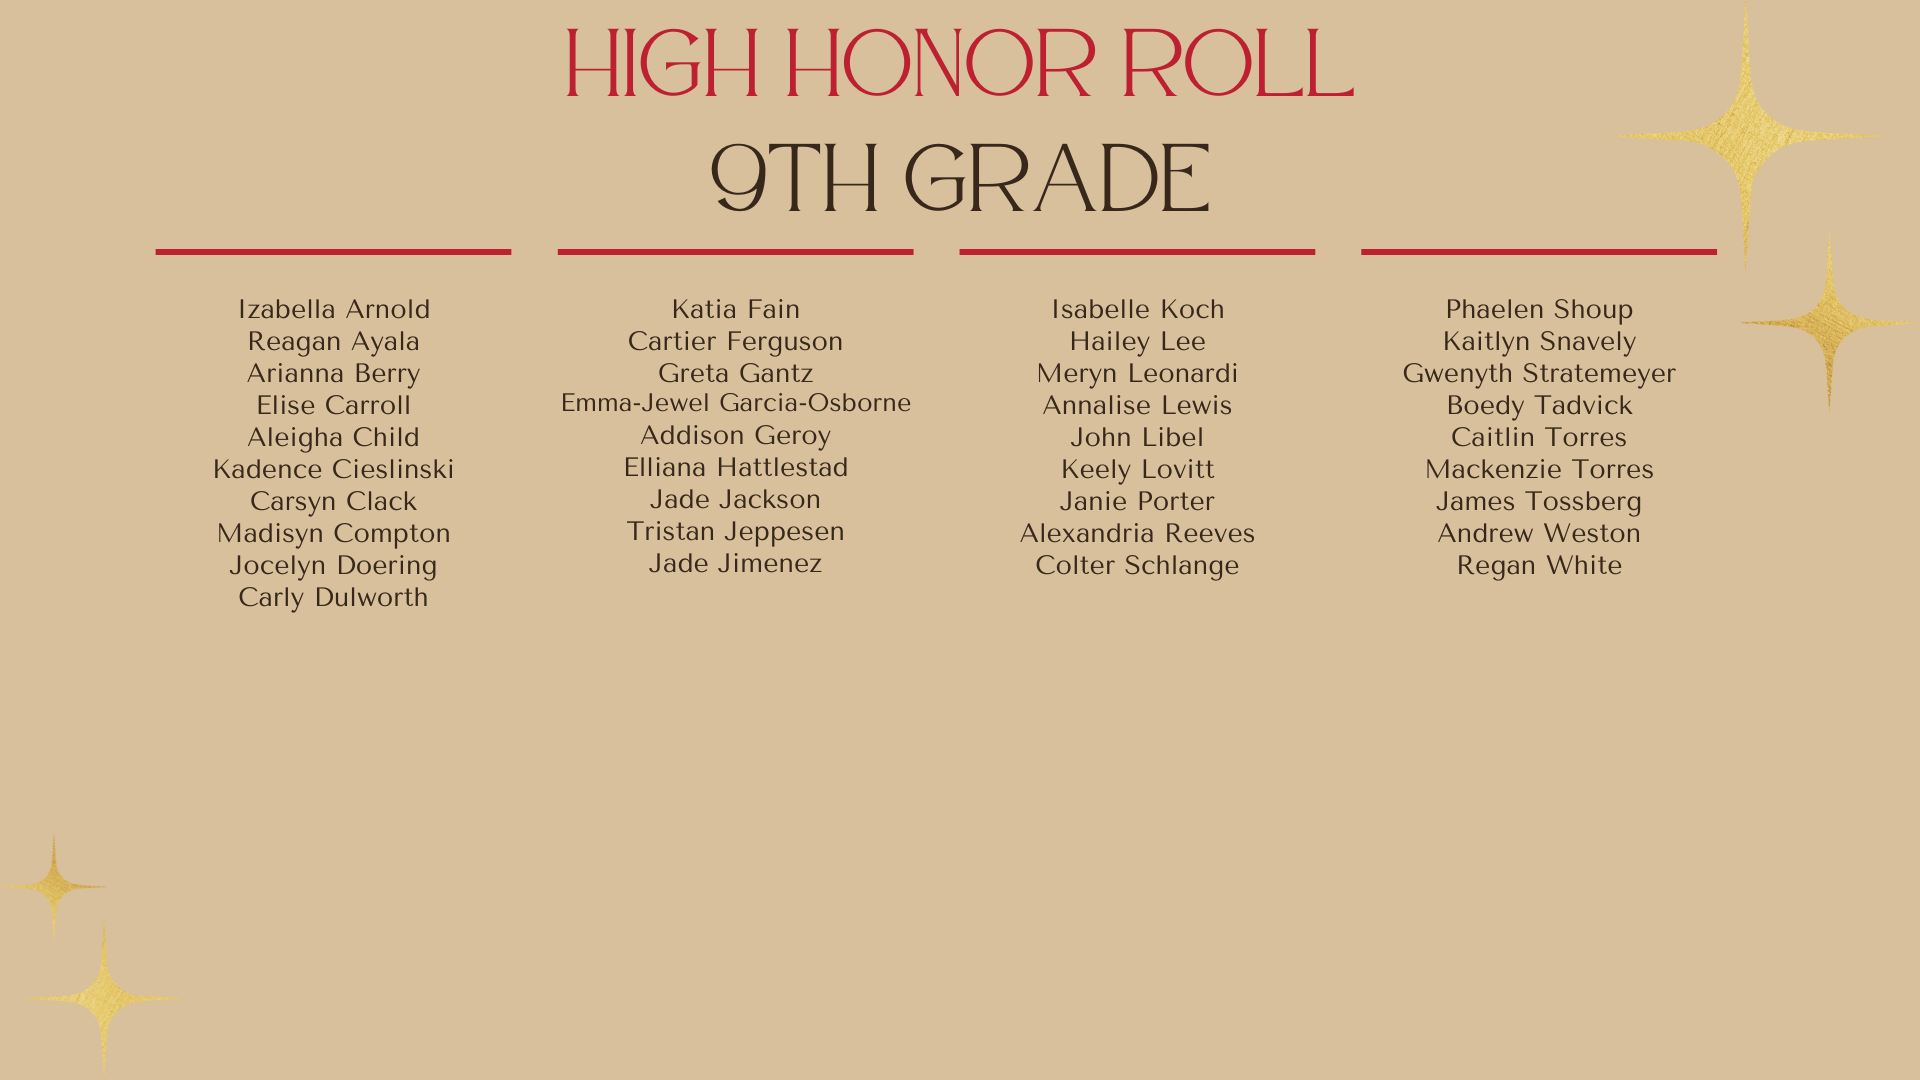 High Honor Roll 9th grade